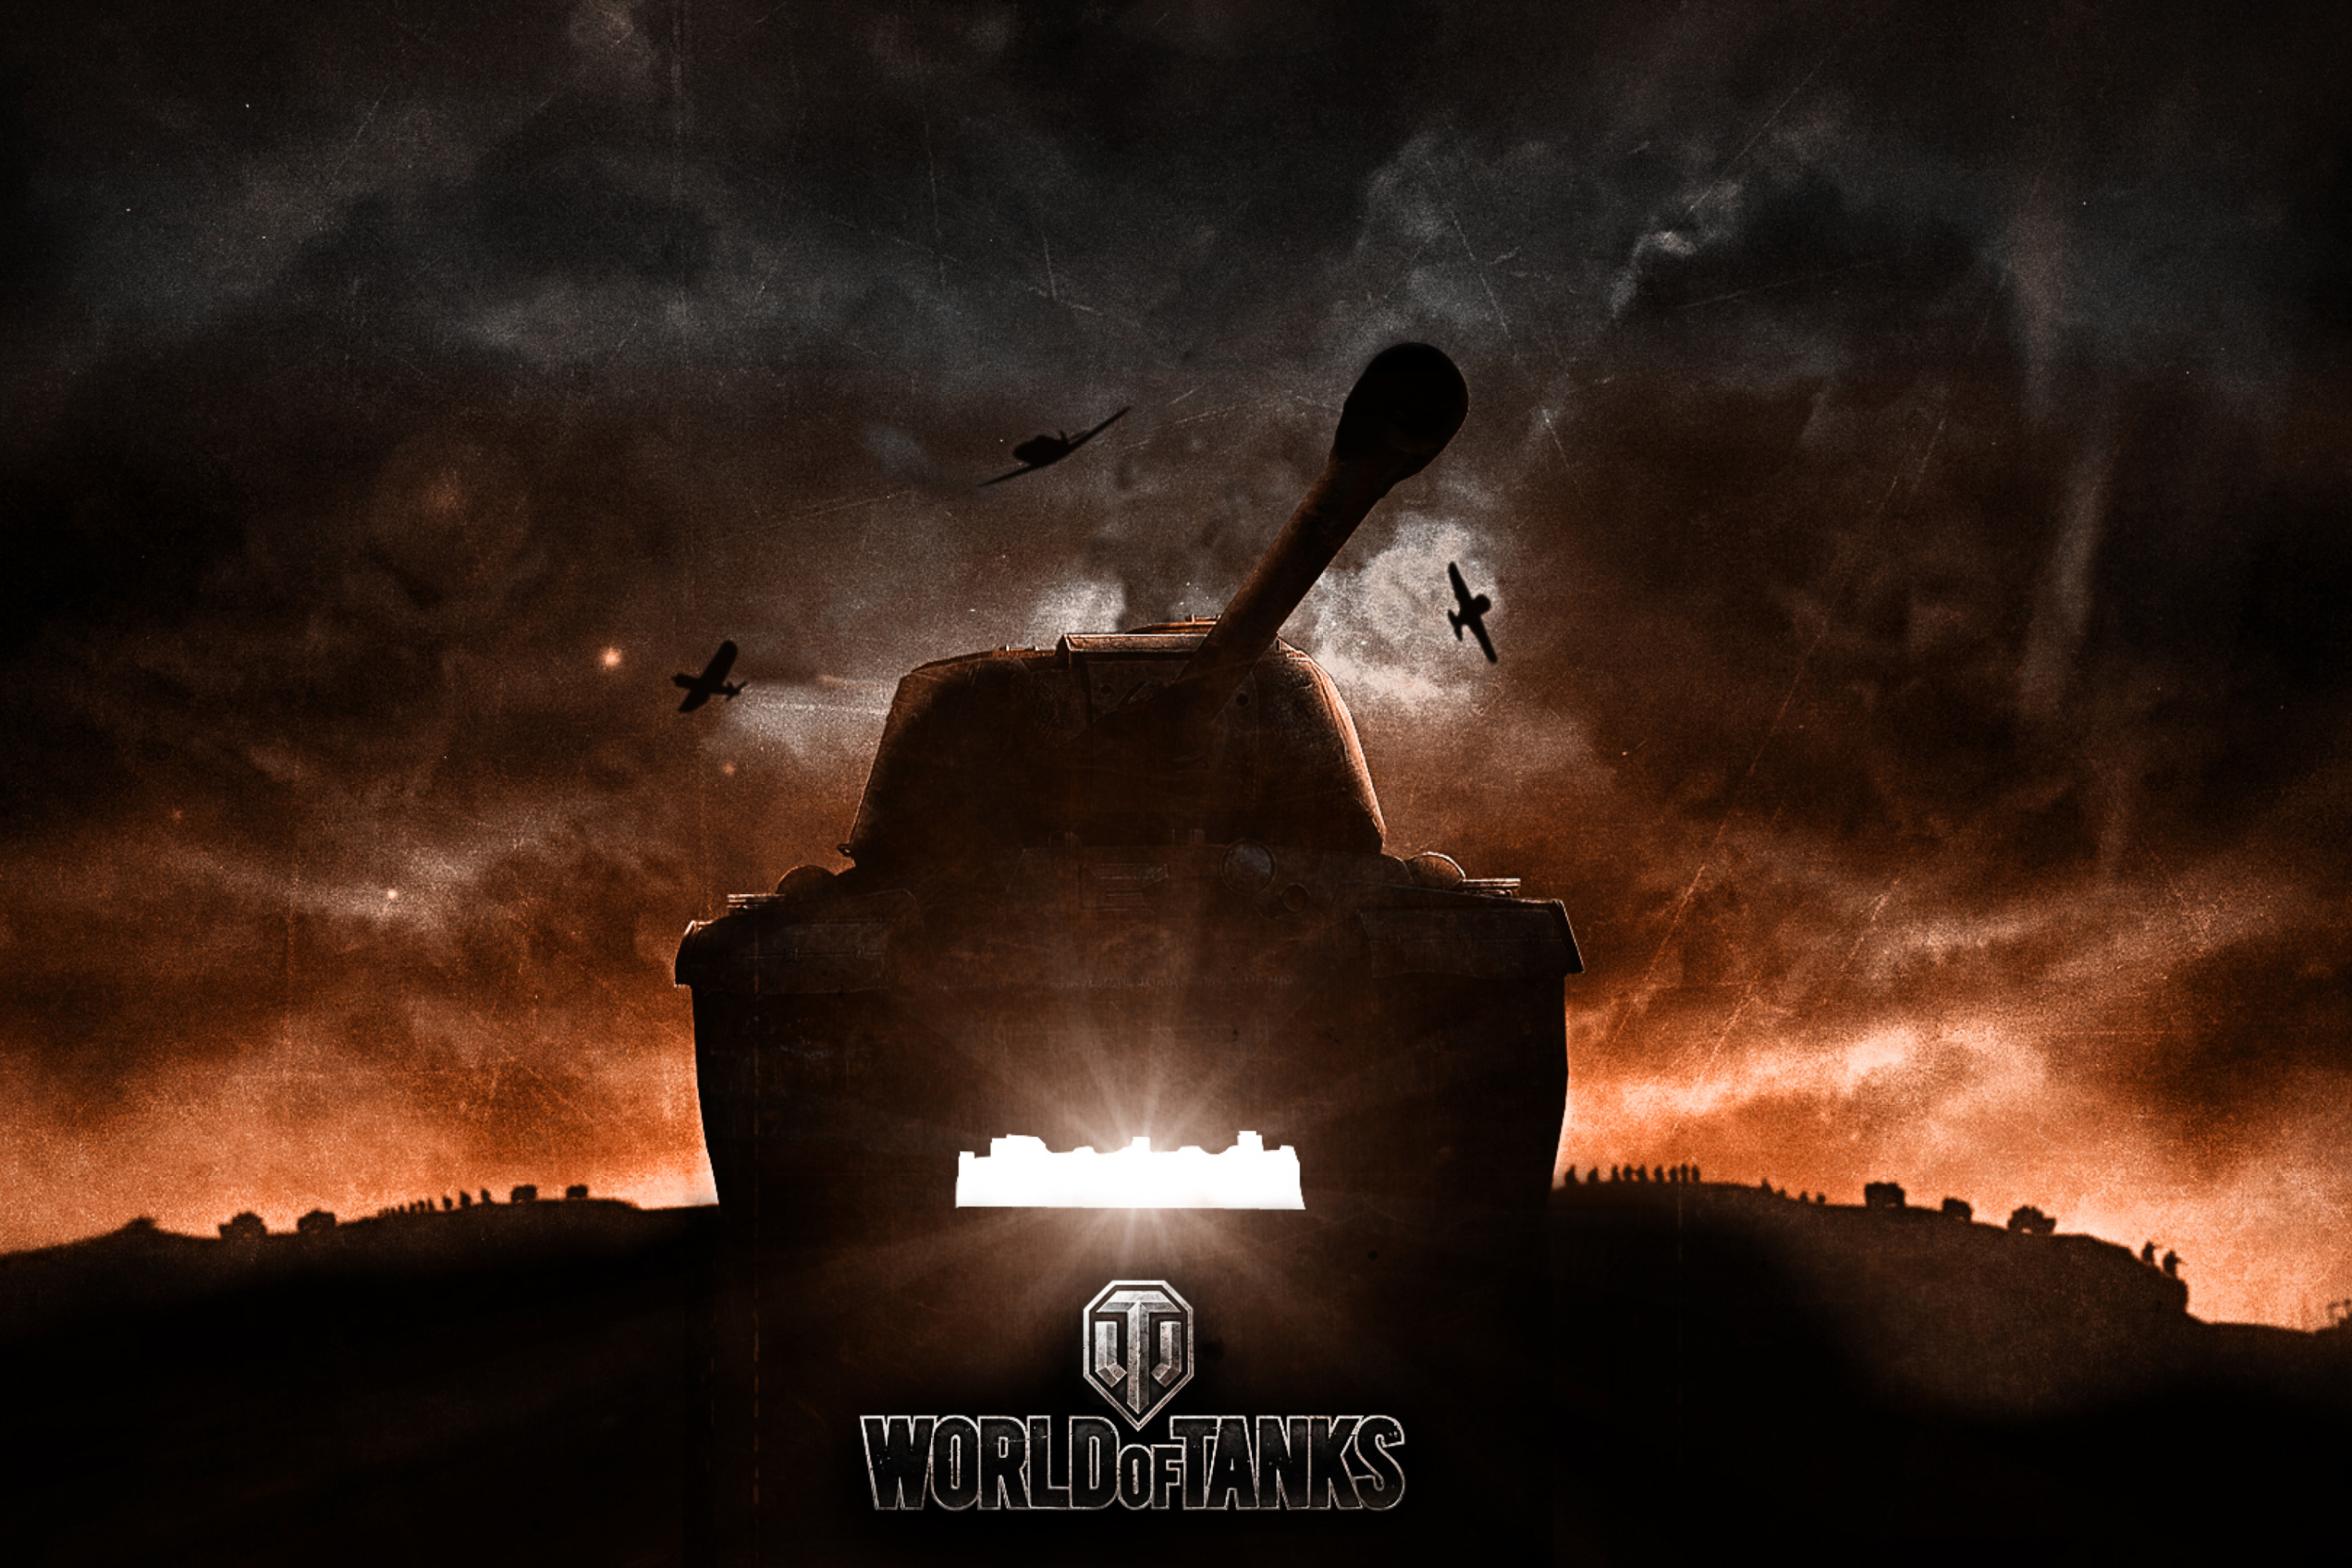 Картинки Танков Из World Of Tanks